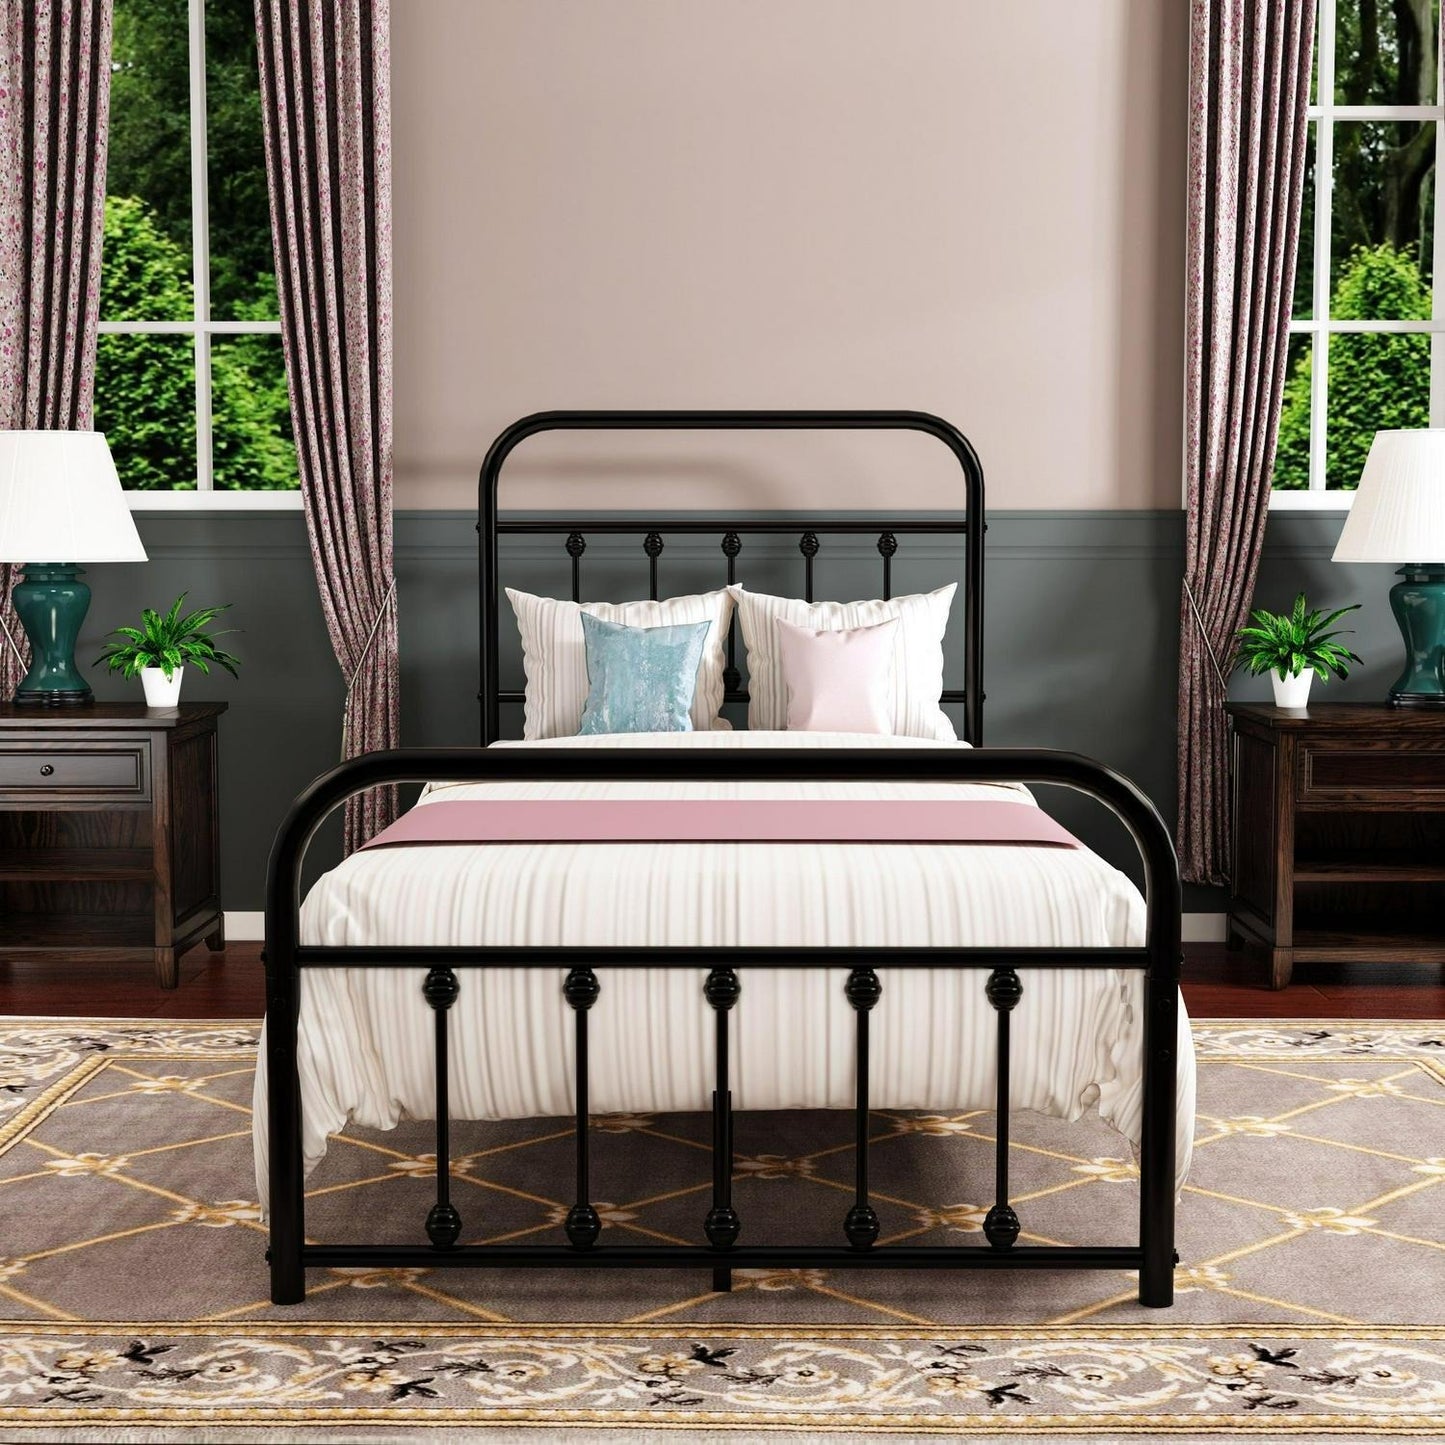 Sleek Vintage-Inspired Metal Platform Bed: Black Finish in QUEEN Size